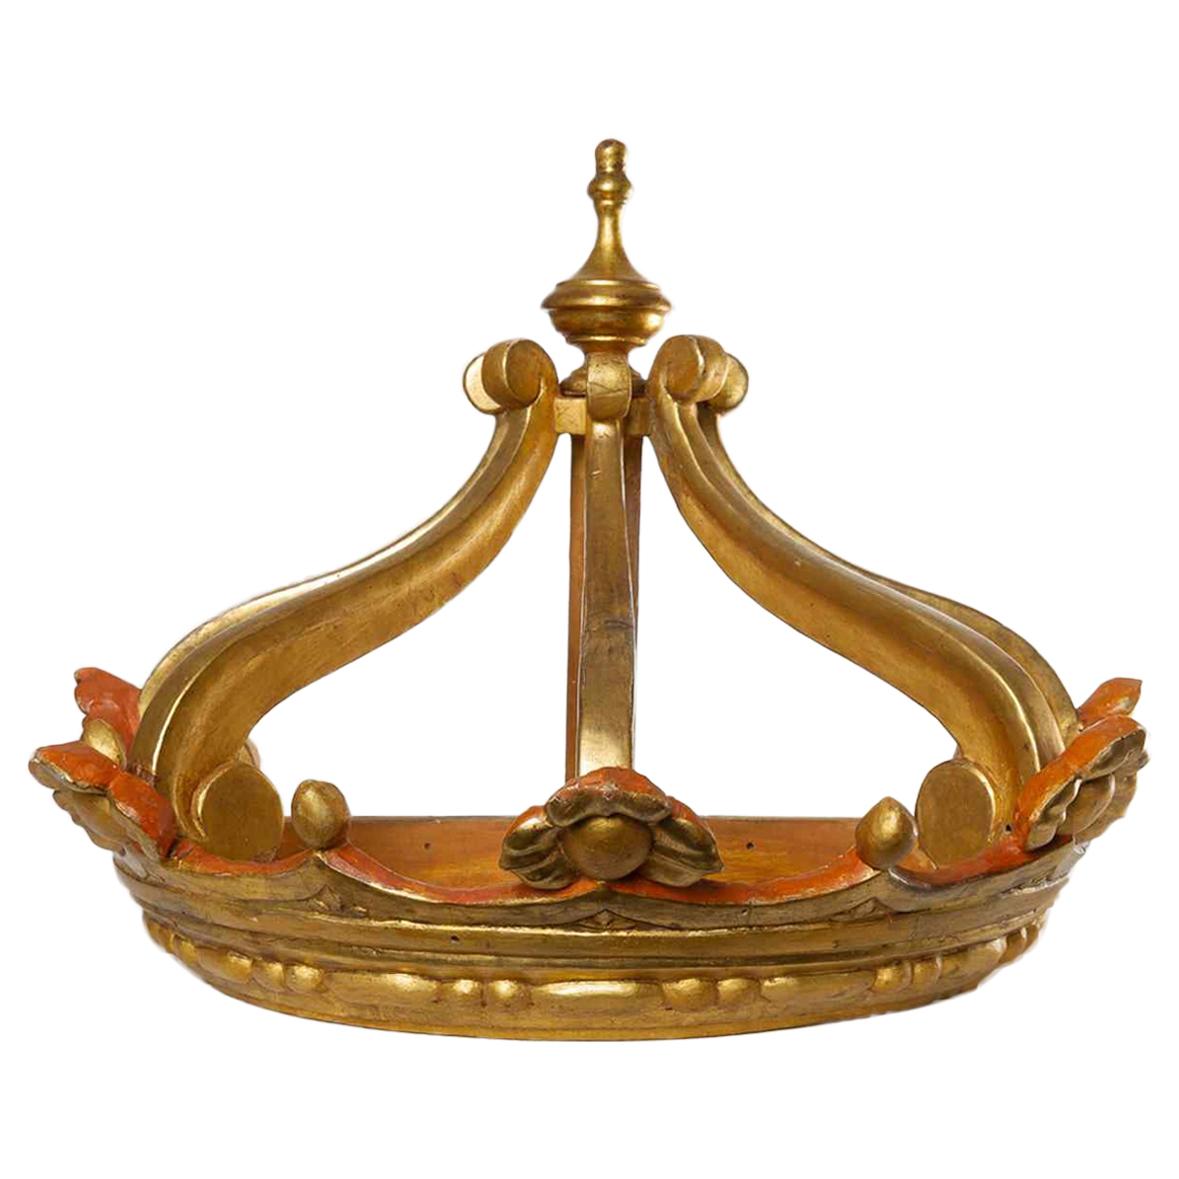  Gilded Wood Antique Crown Sculpture